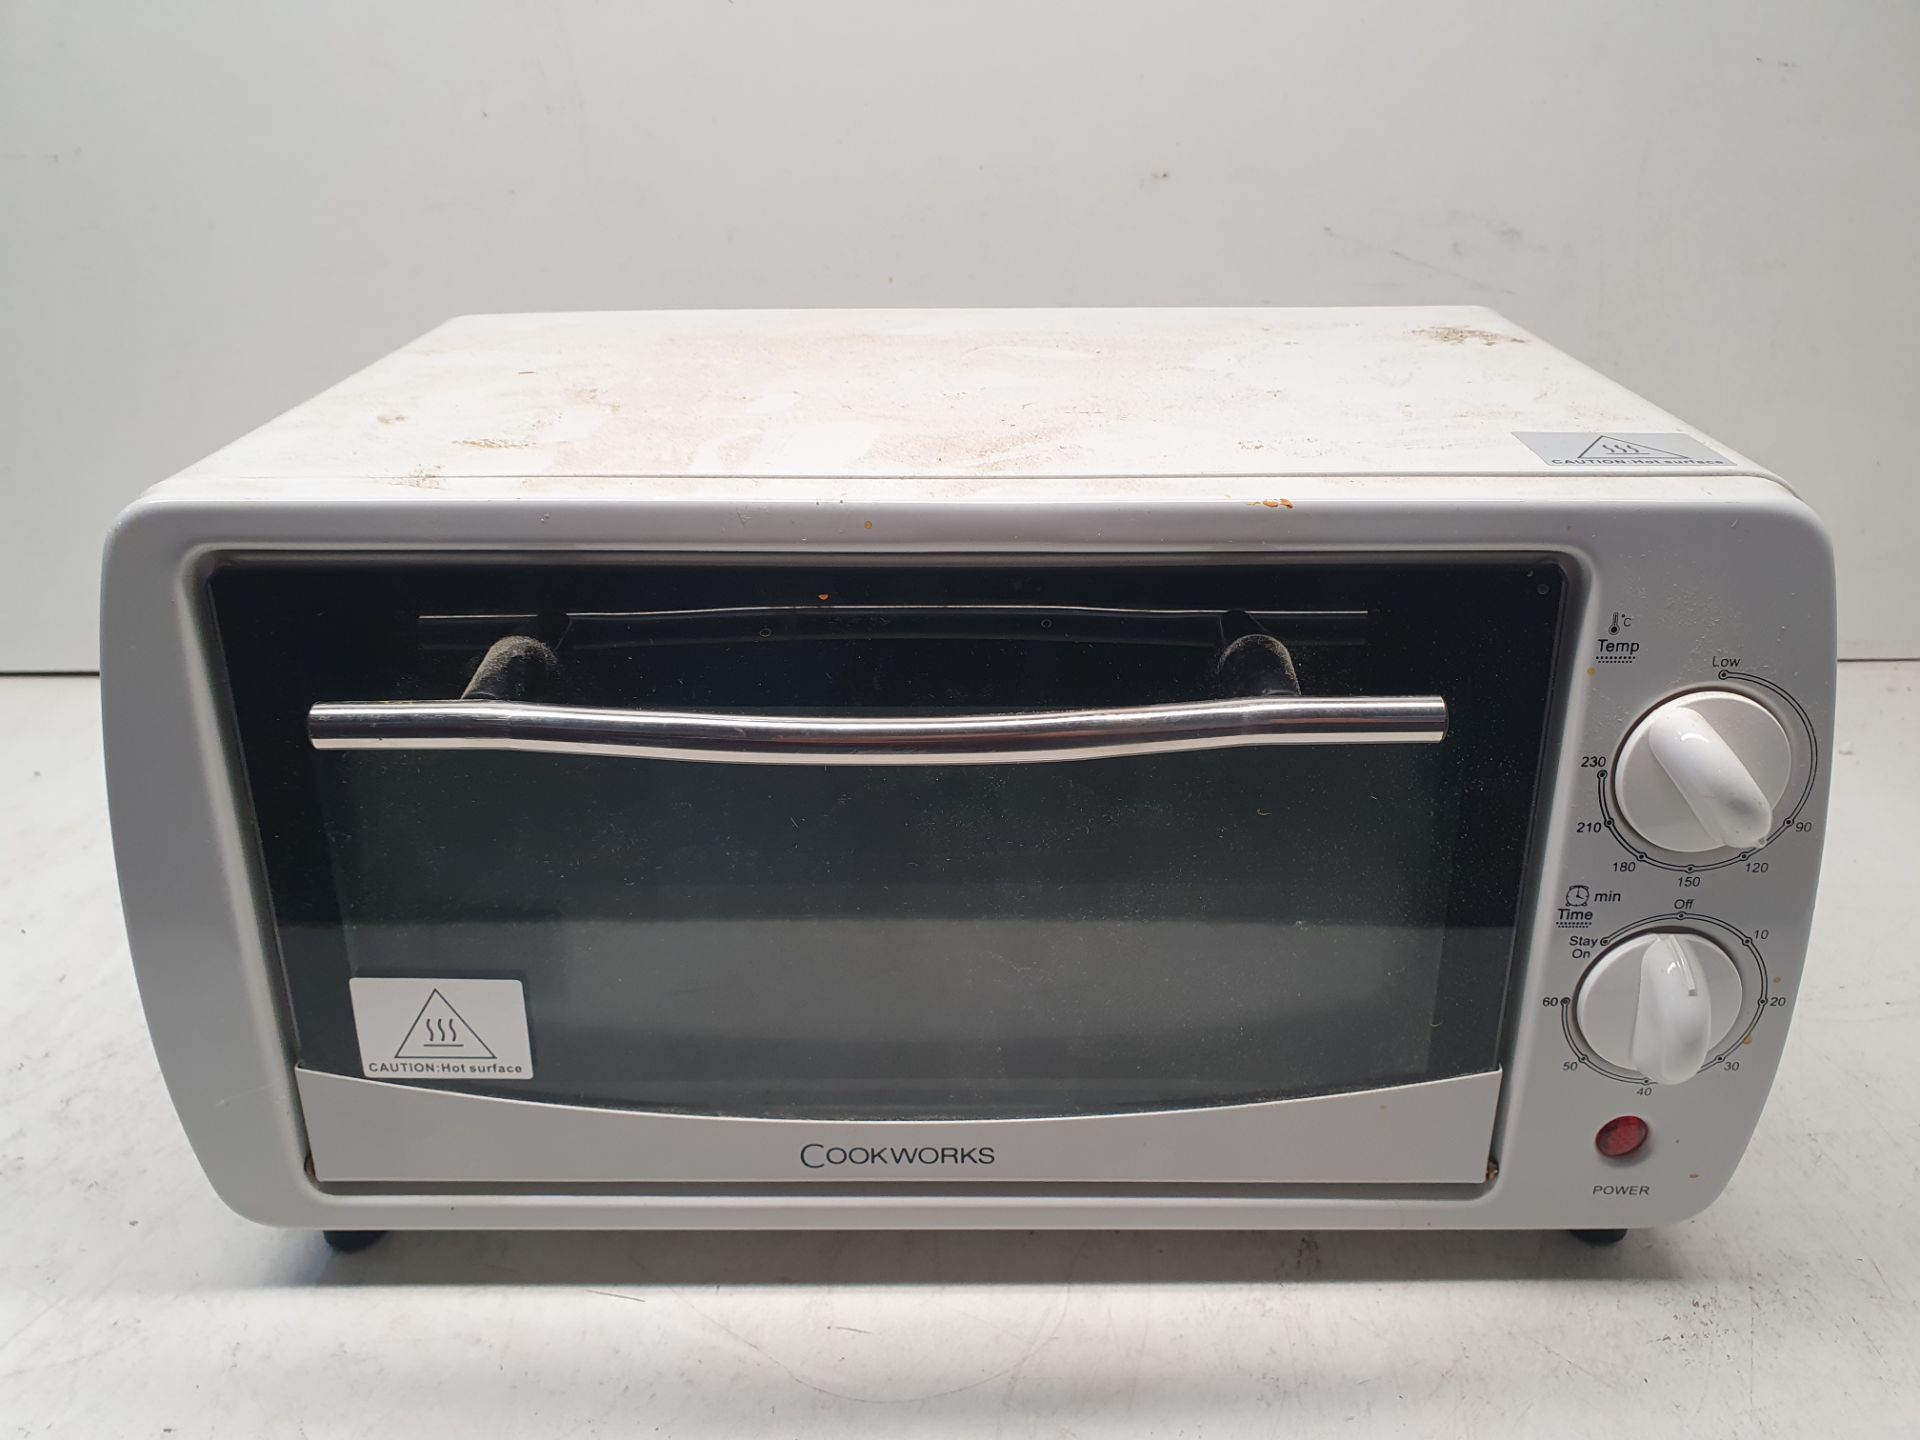 Cookworks Toaster Oven